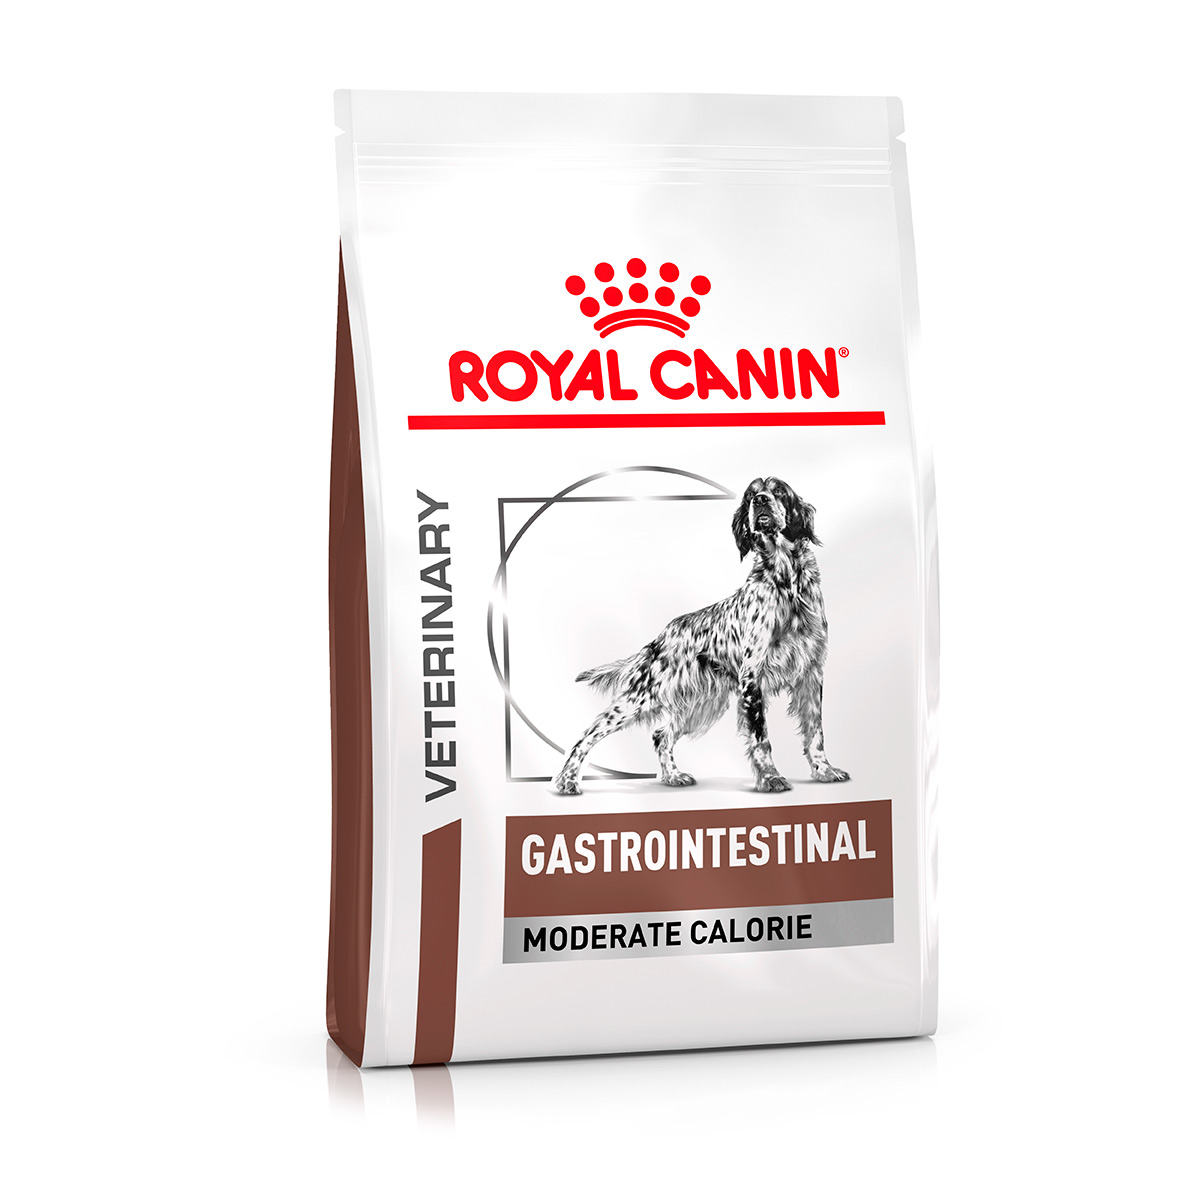 ROYAL CANIN® Veterinary GASTROINTESTINAL MODERATE CALORIE Trockenfutter für Hunde 15kg